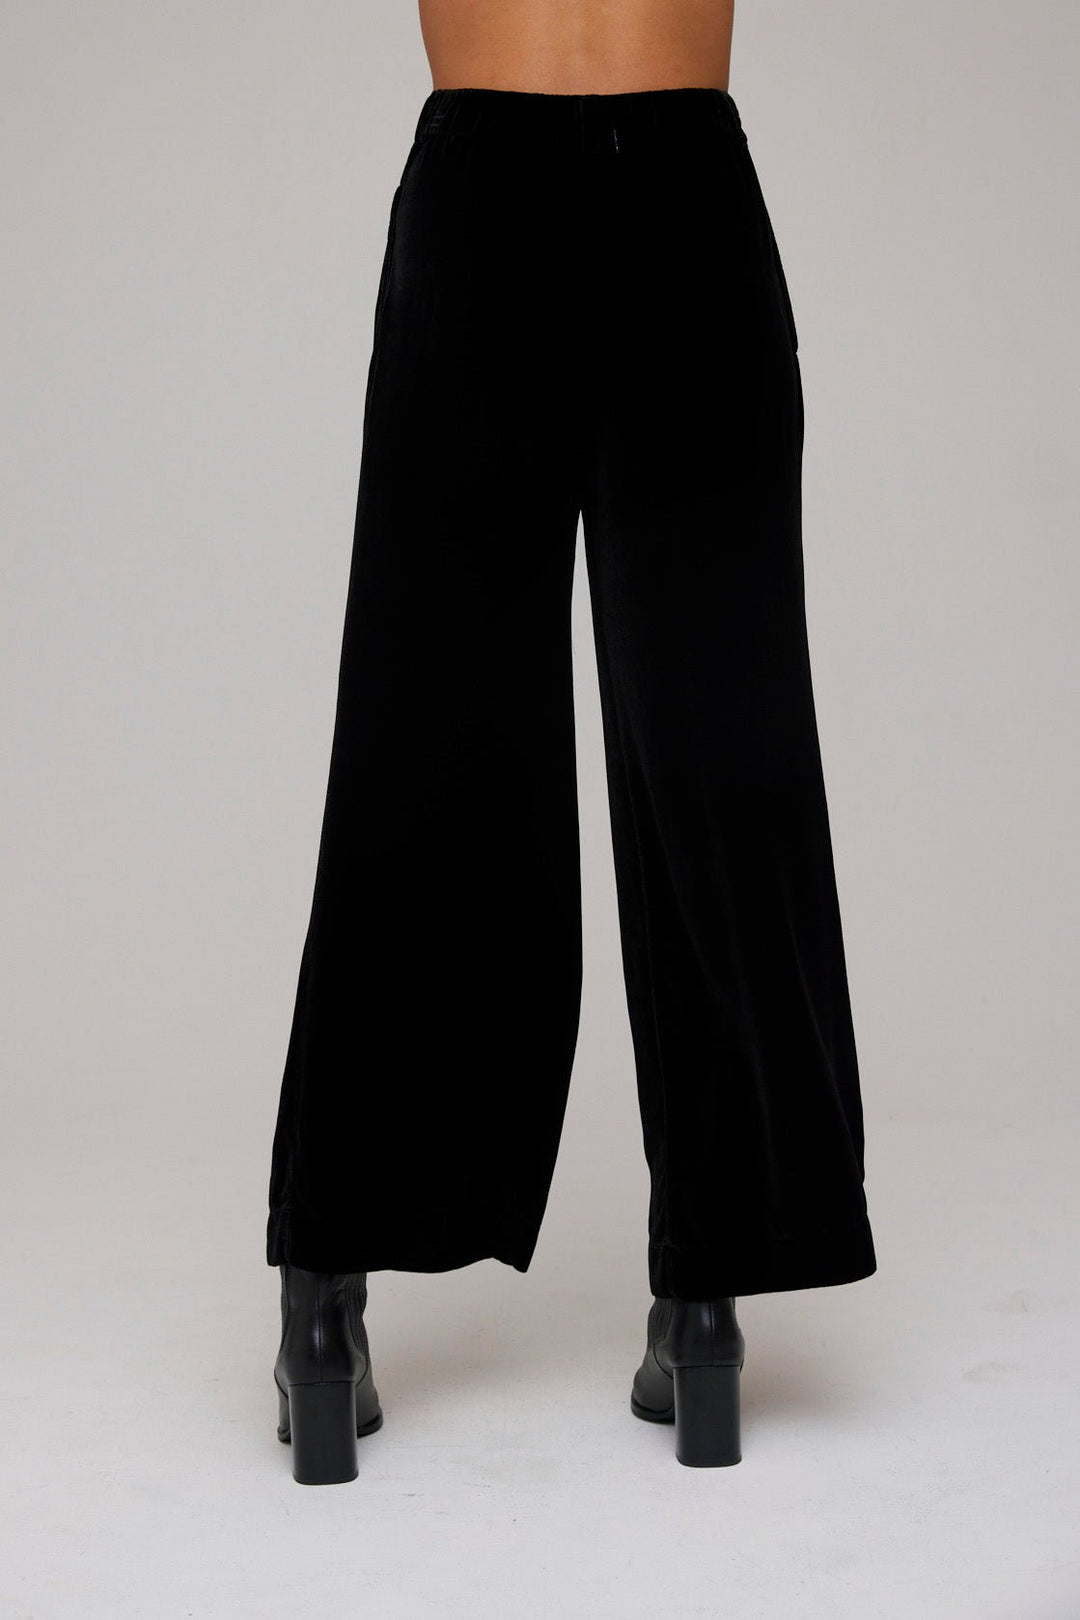 20121231cropped-596x852 | Black trousers outfit party, Velvet pants outfit, Black  velvet shirt